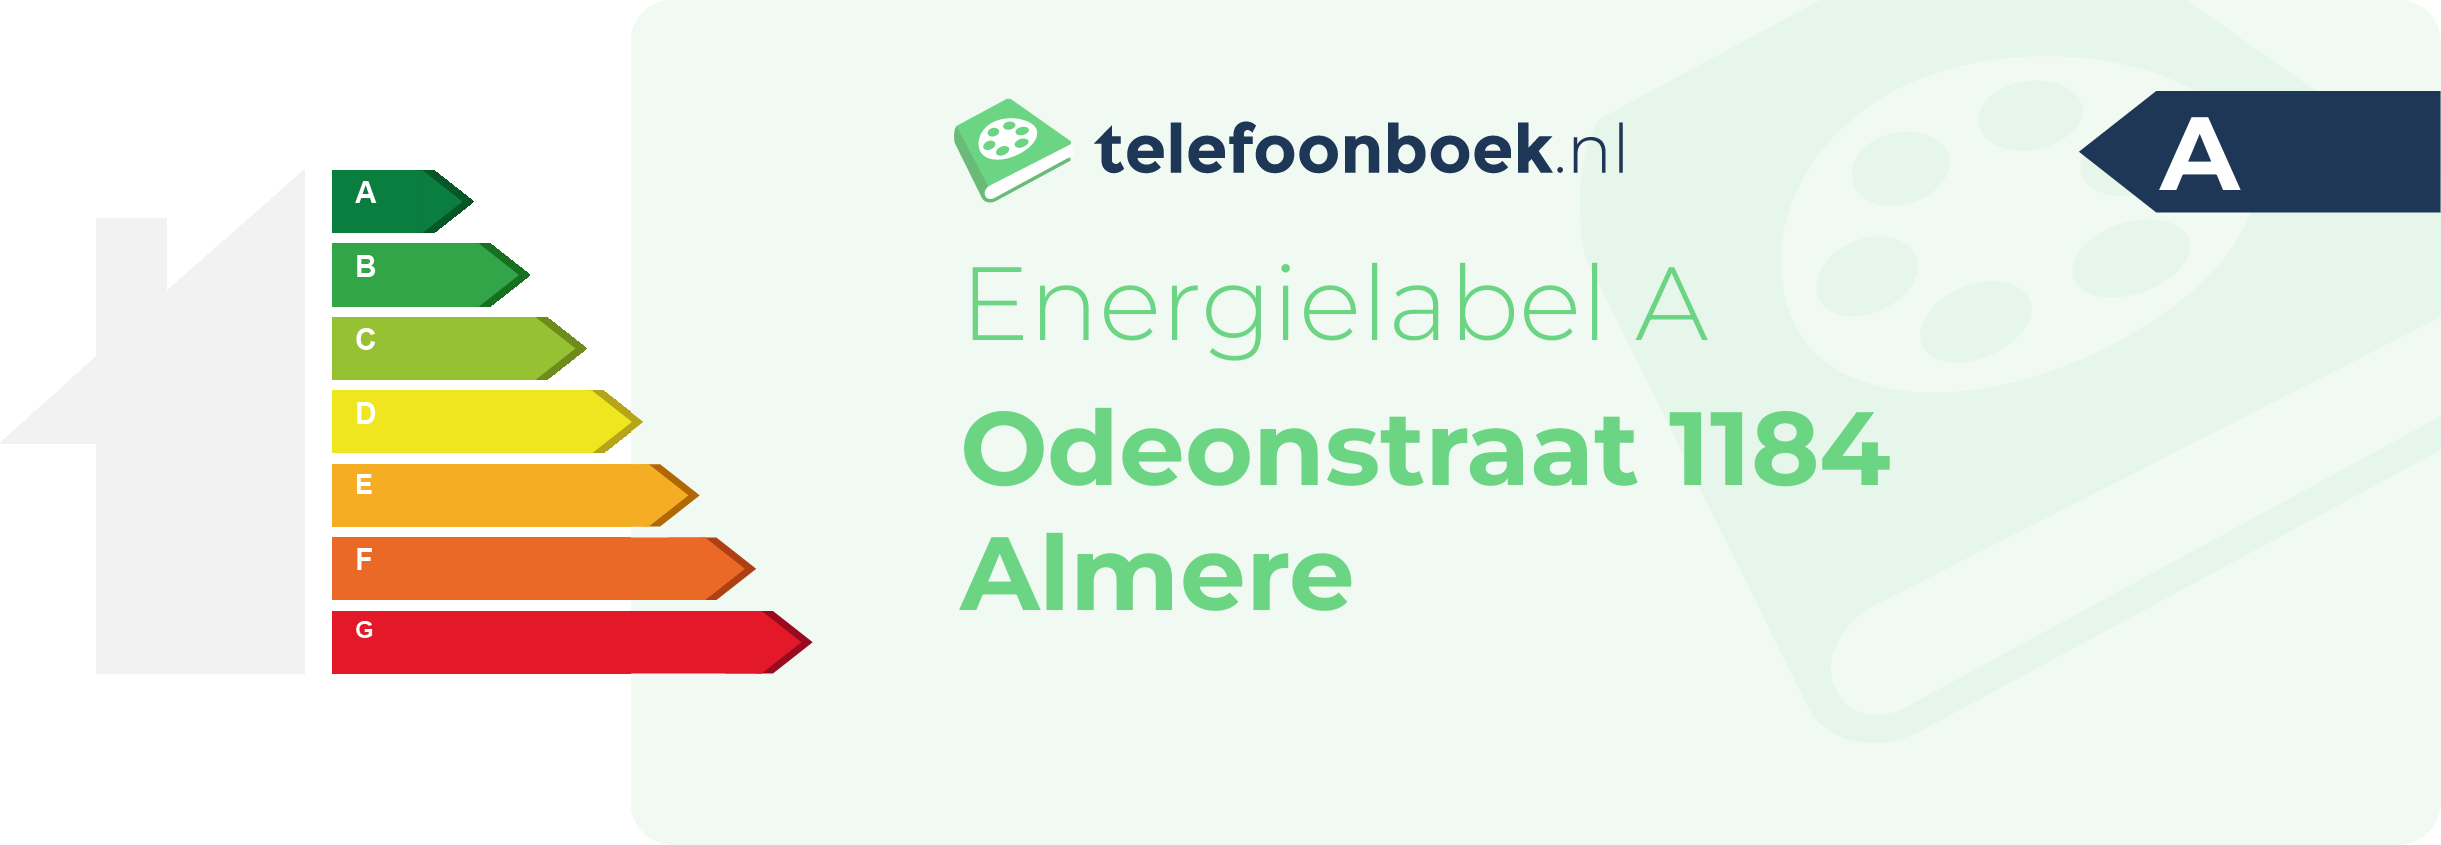 Energielabel Odeonstraat 1184 Almere